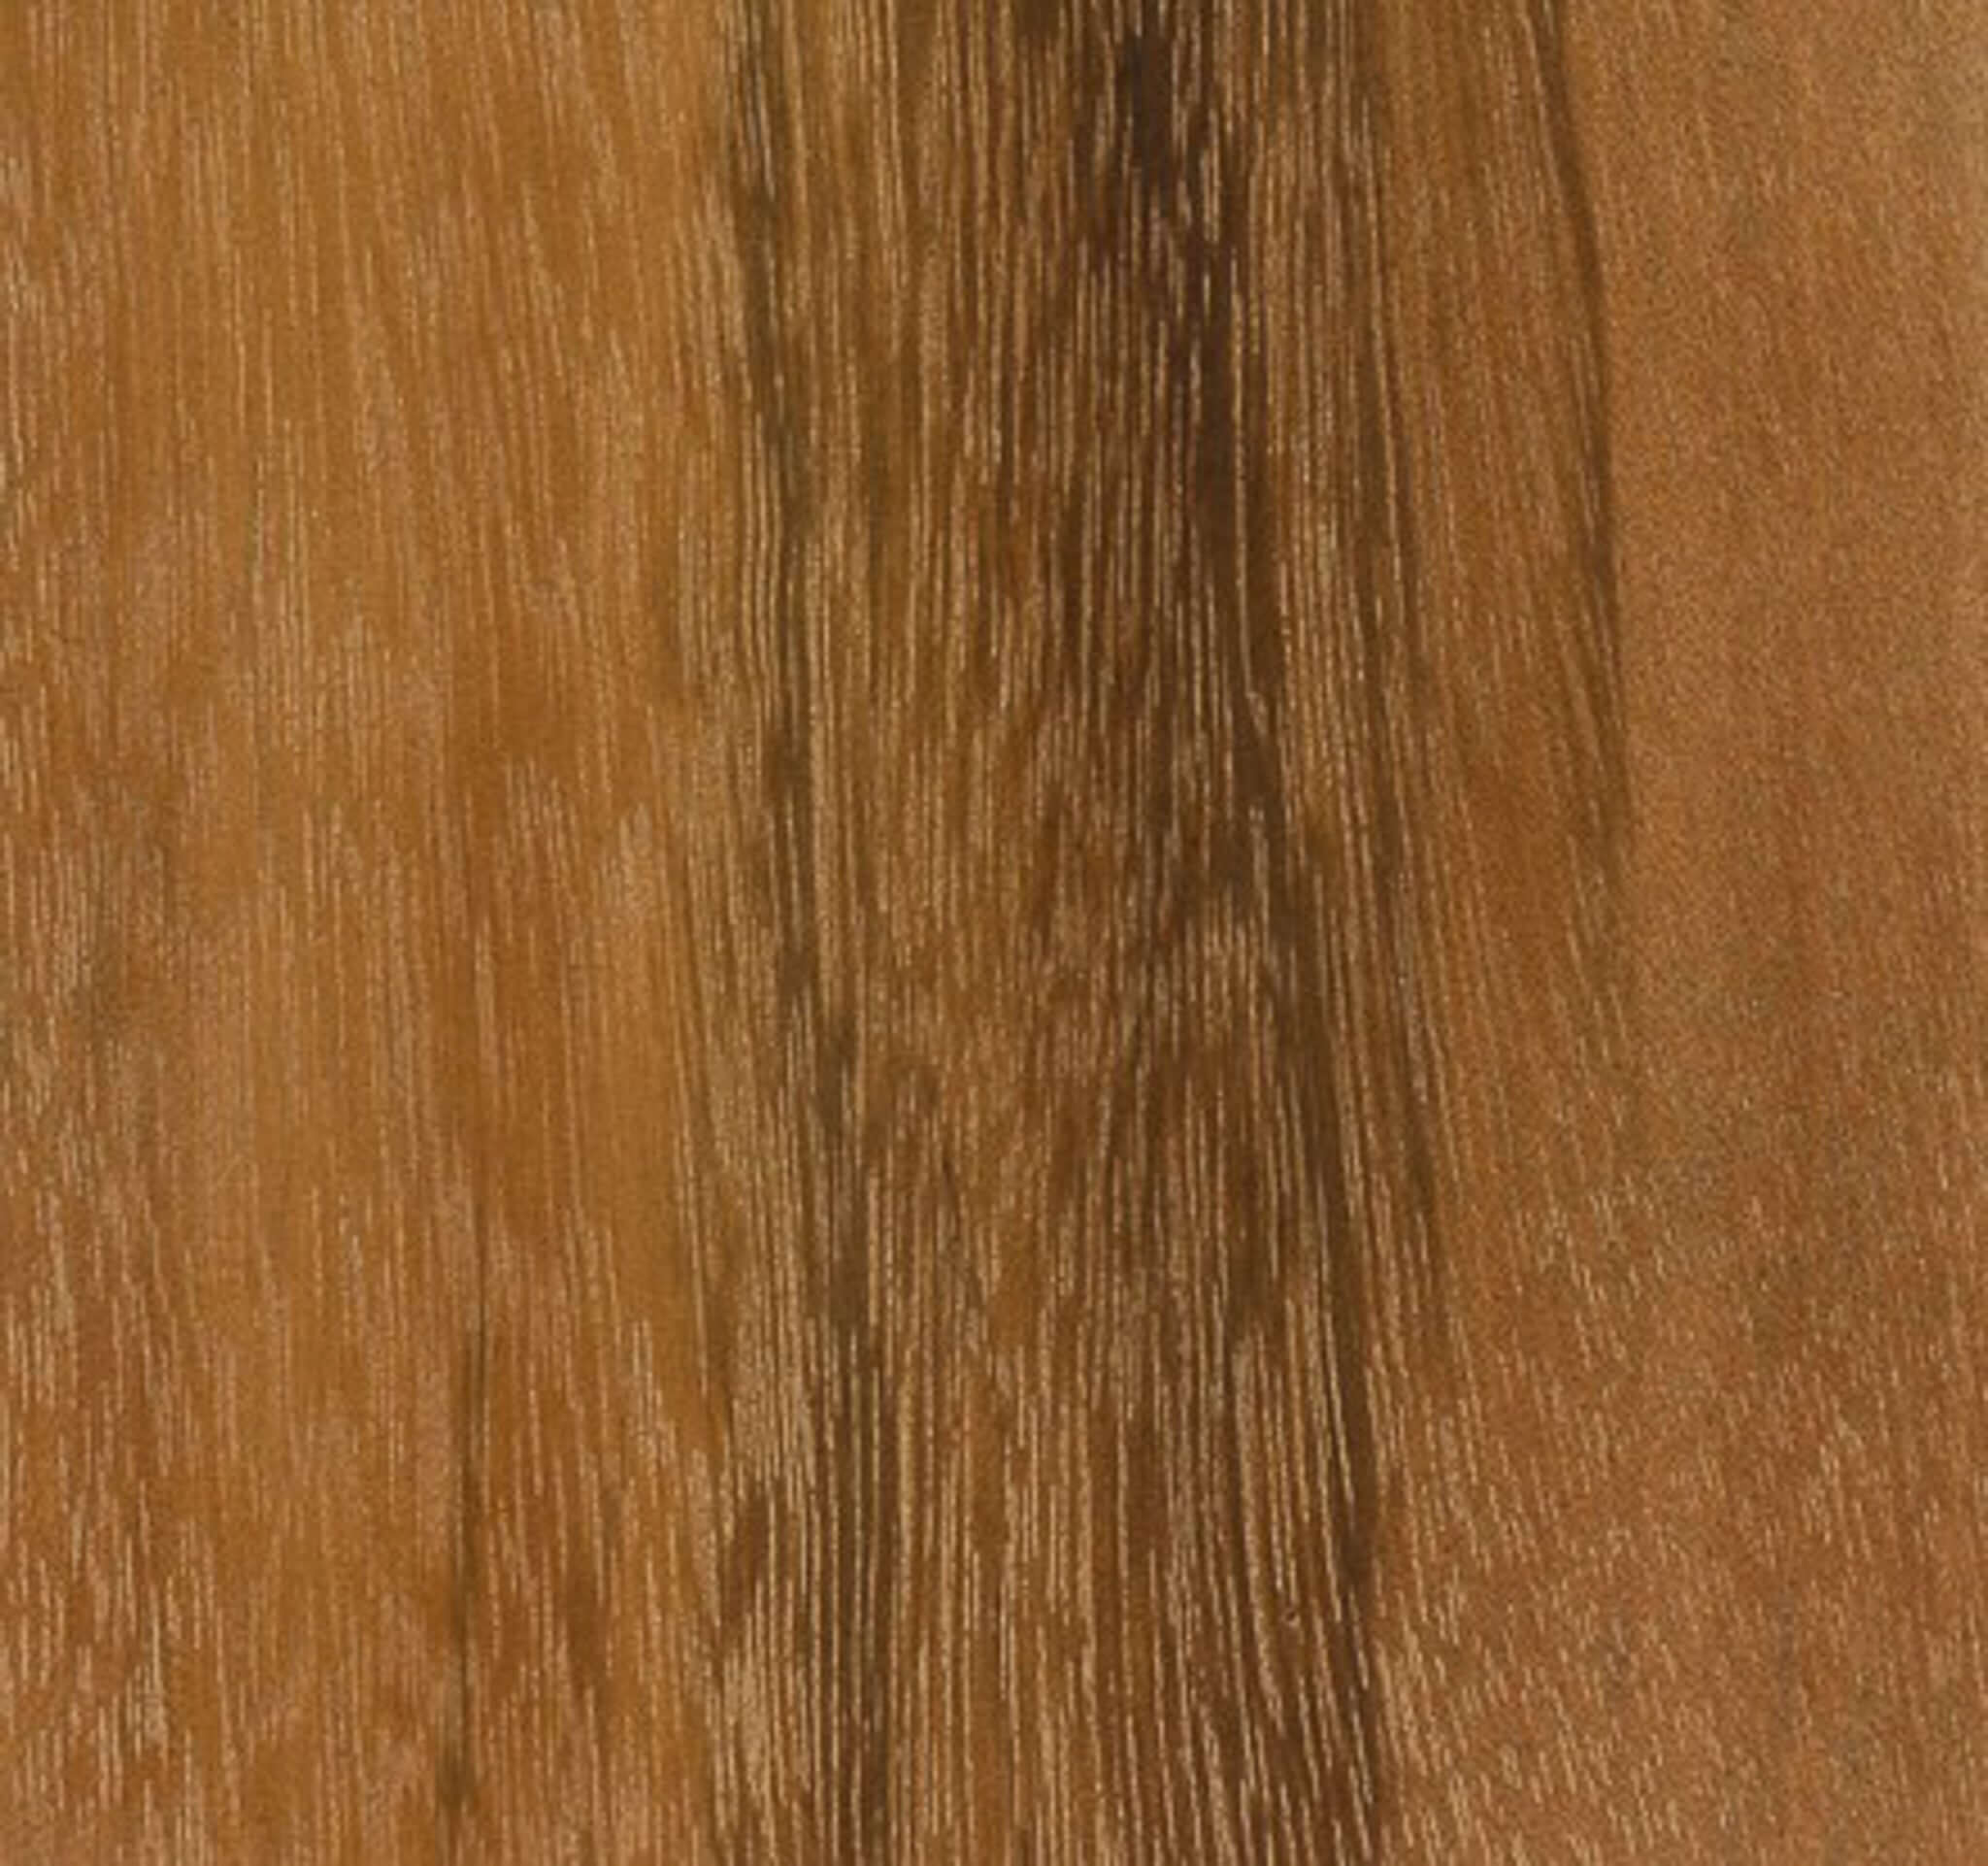 a sample of goncalo alves wood